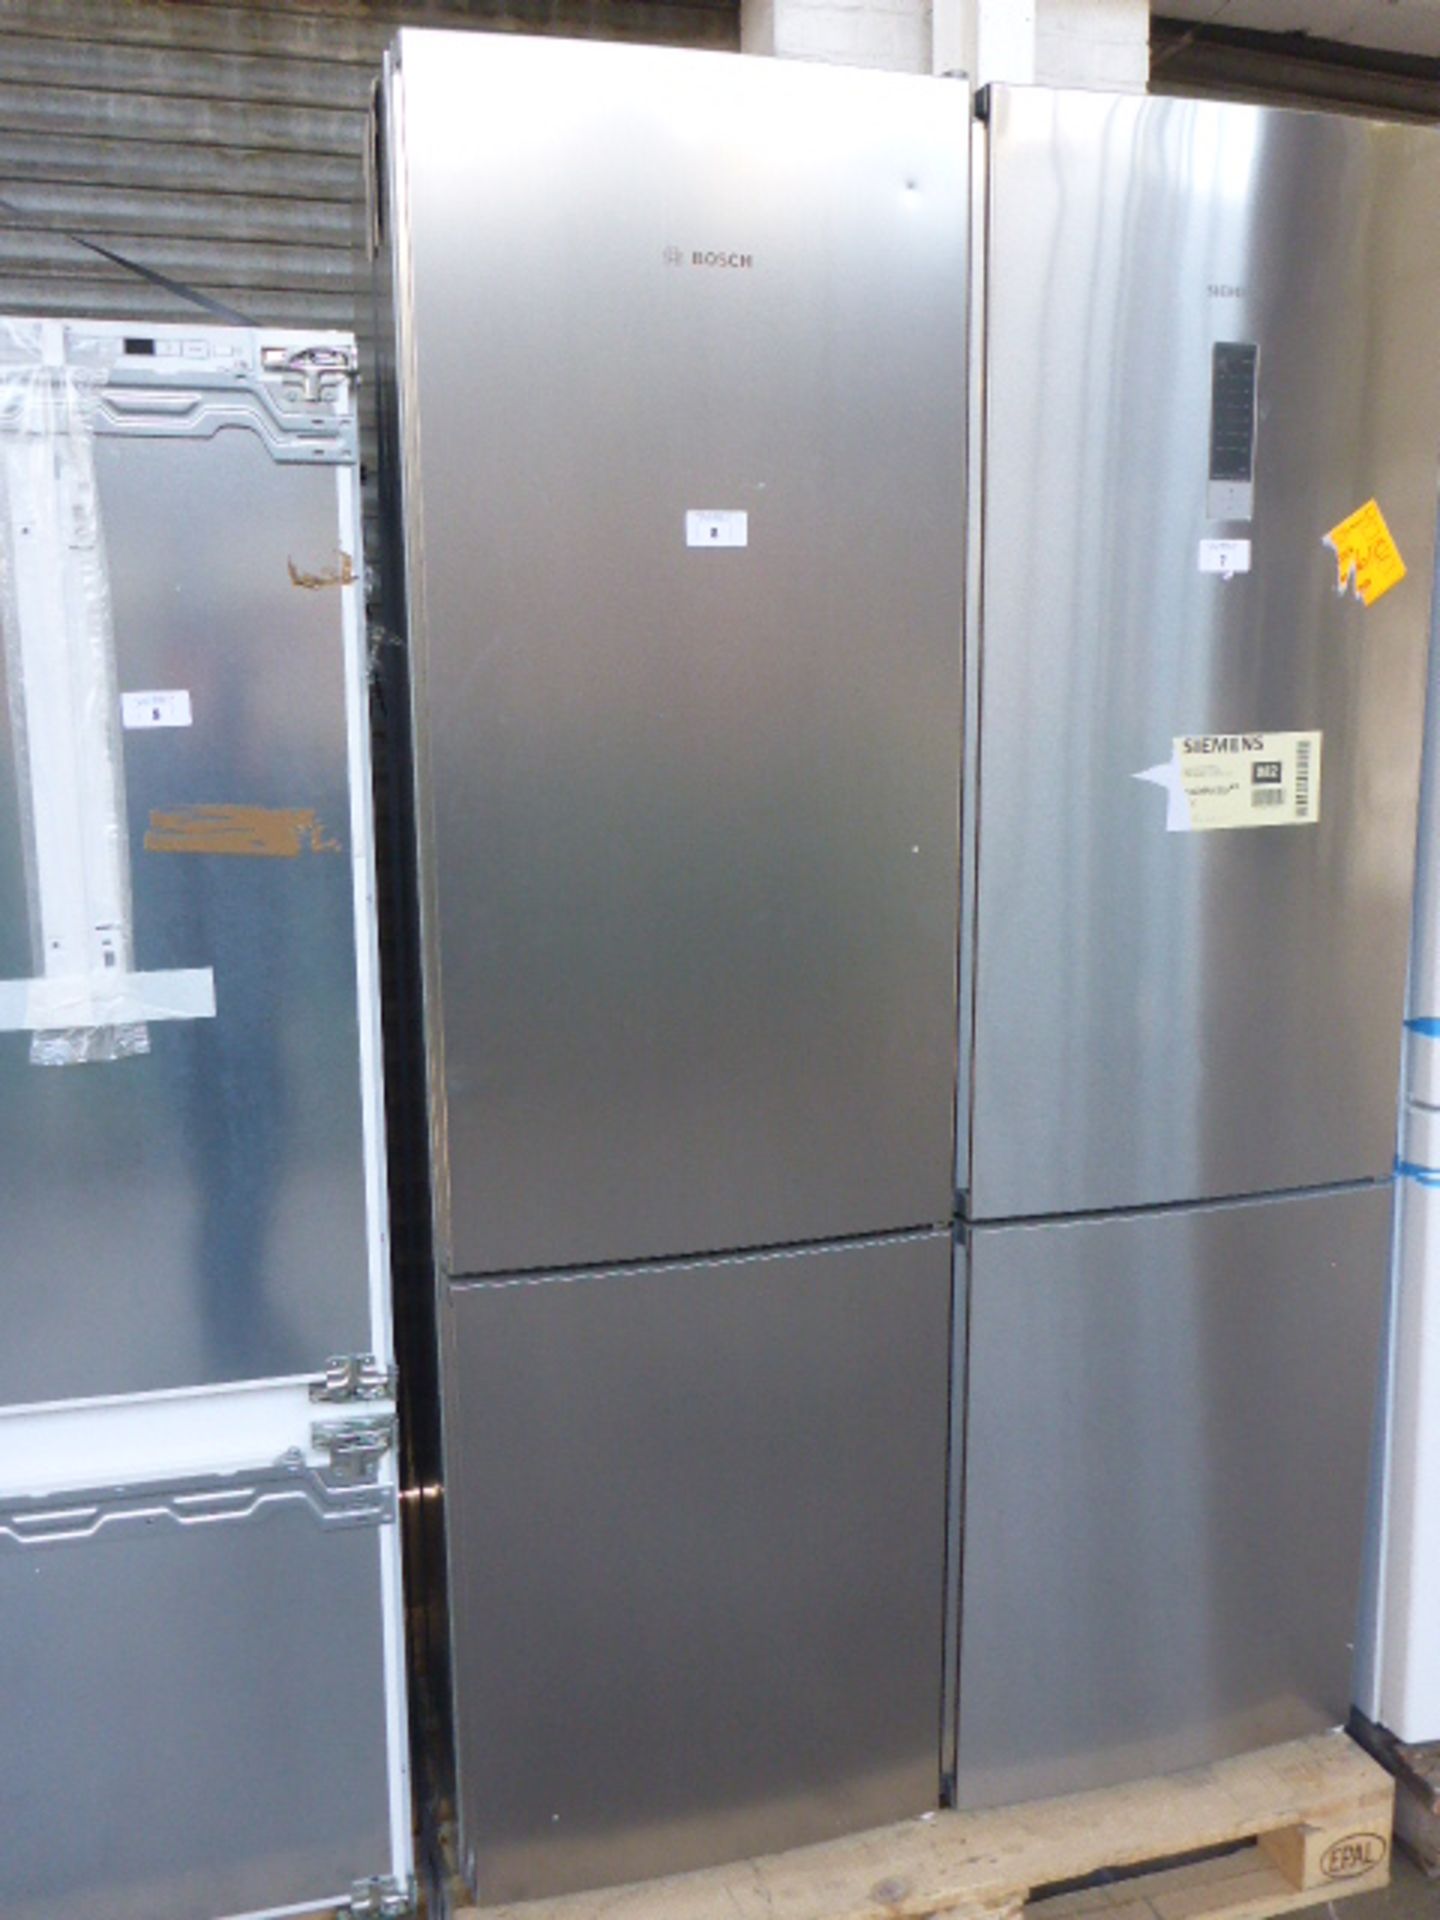 KGN39VL35GB Bosch Free-standing fridge-freezer